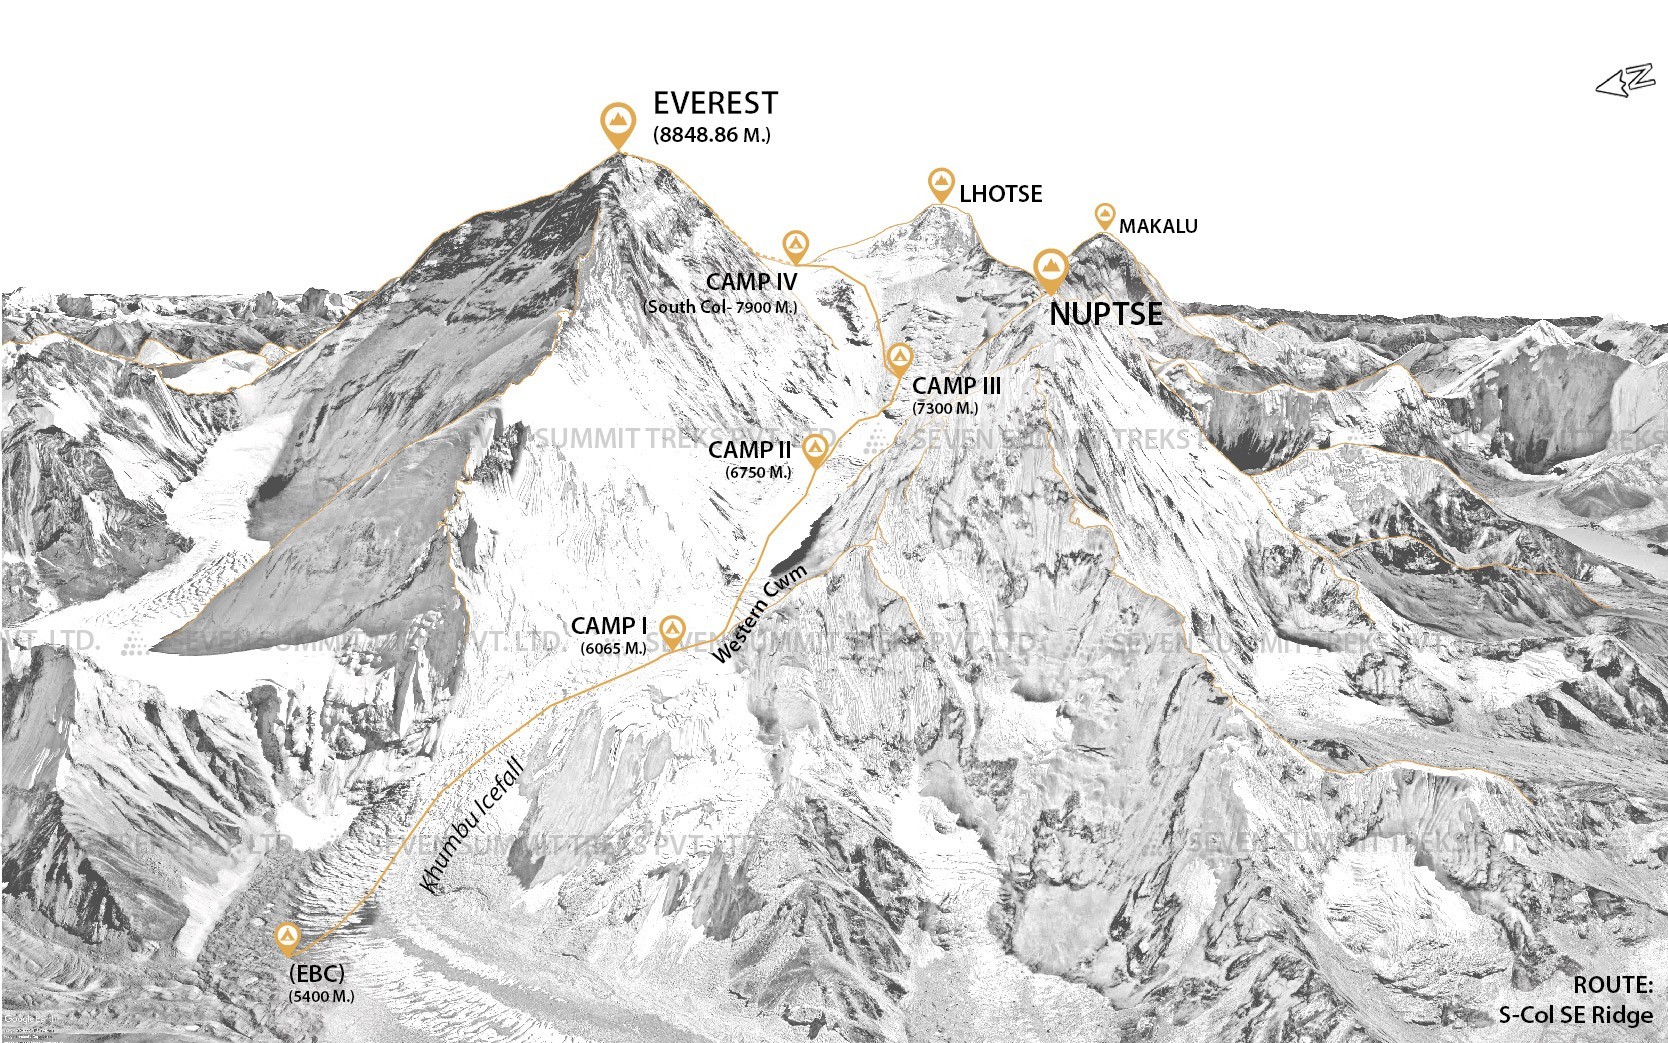 MT. EVEREST EXPEDITION (8848.86M) WITH LOBUCHE PEAK (6119M) CLIMBING